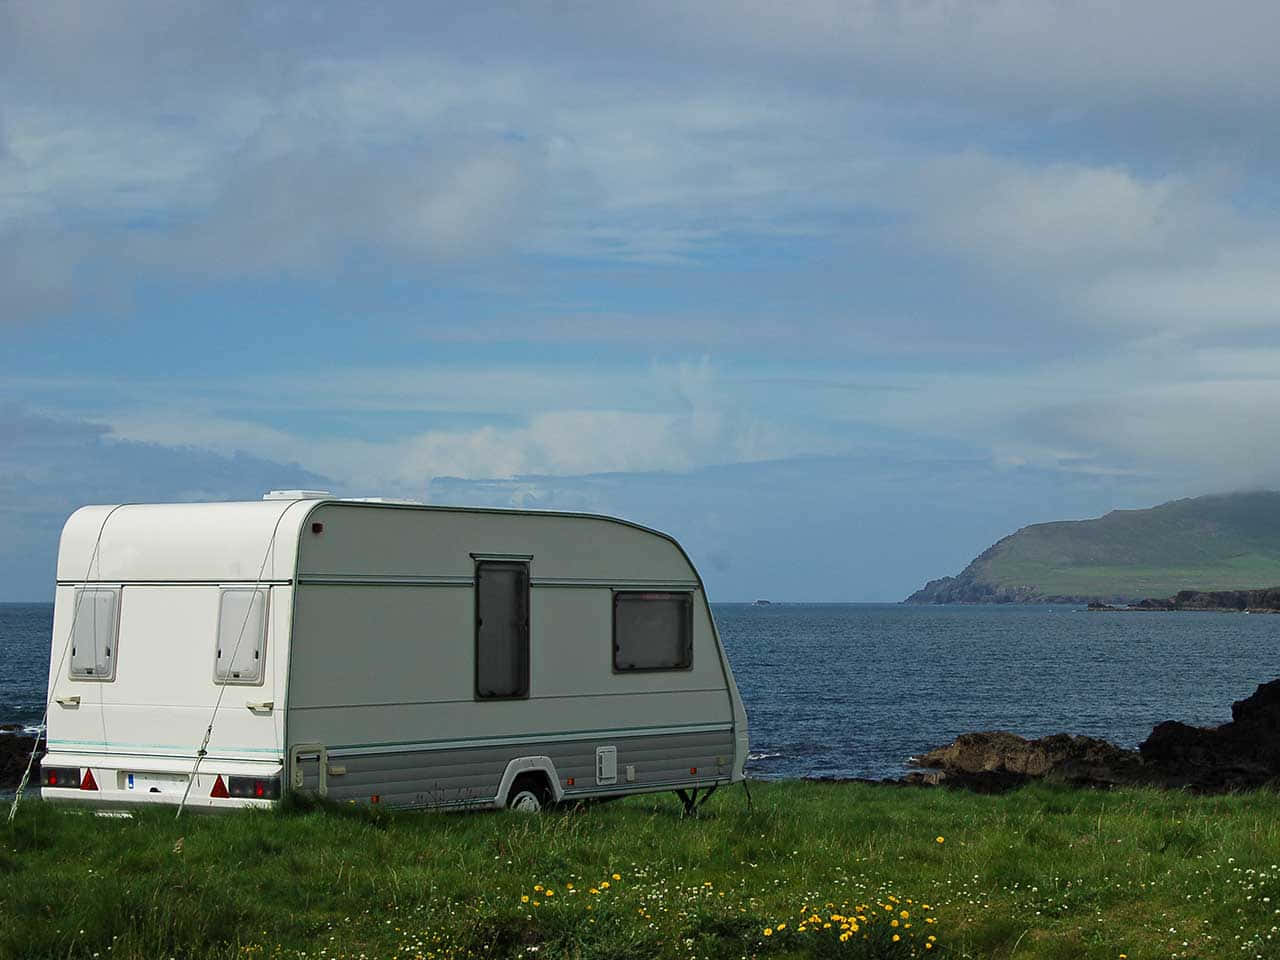 An adventurous roadtrip with your favourite caravan